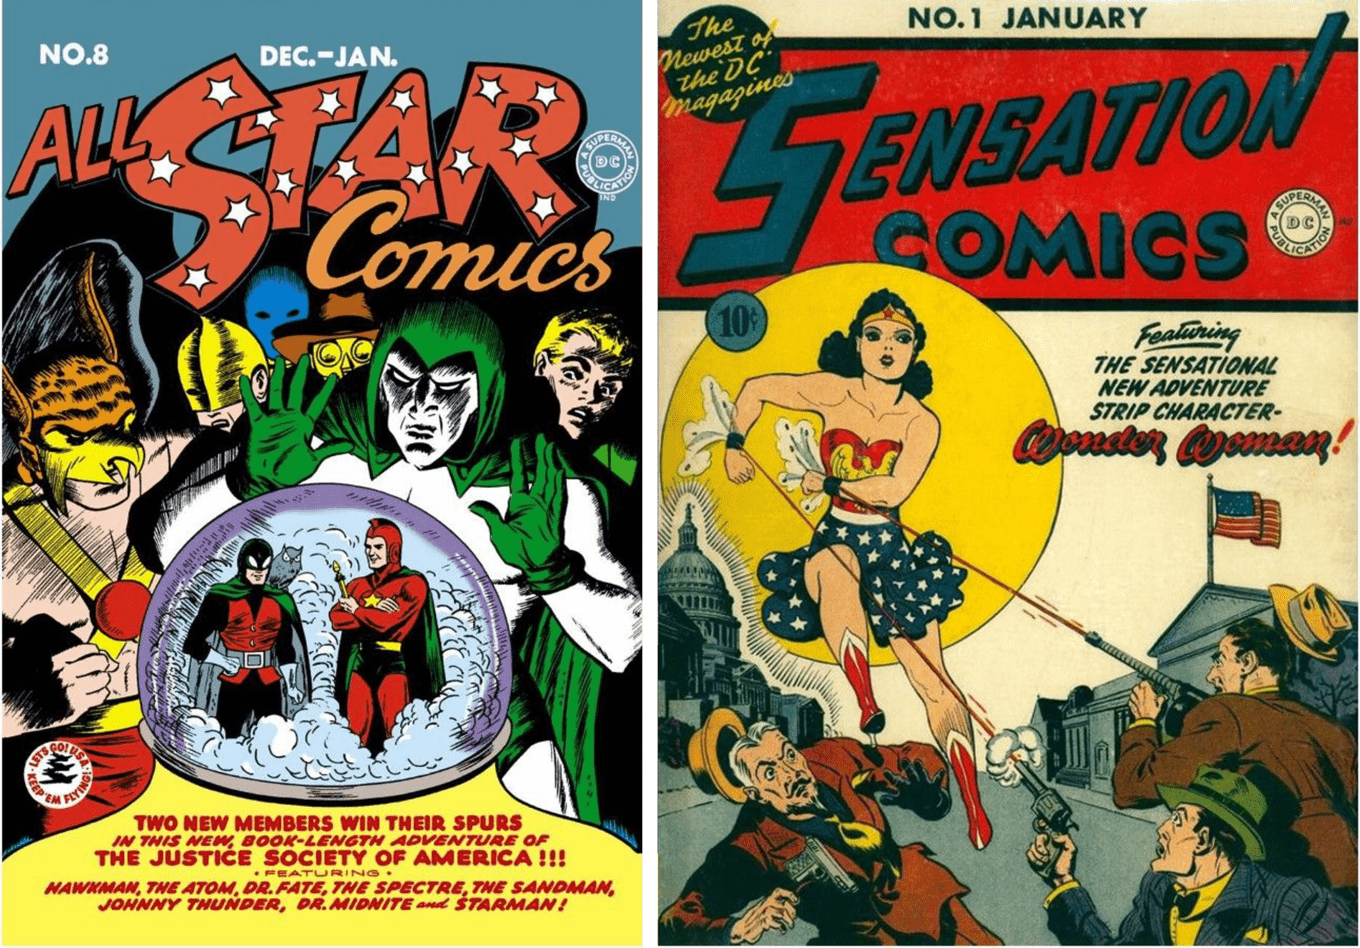 Wonder Woman in All-Star Comics #8 December 1941 & Sensation Comics #1 Januaru 1942